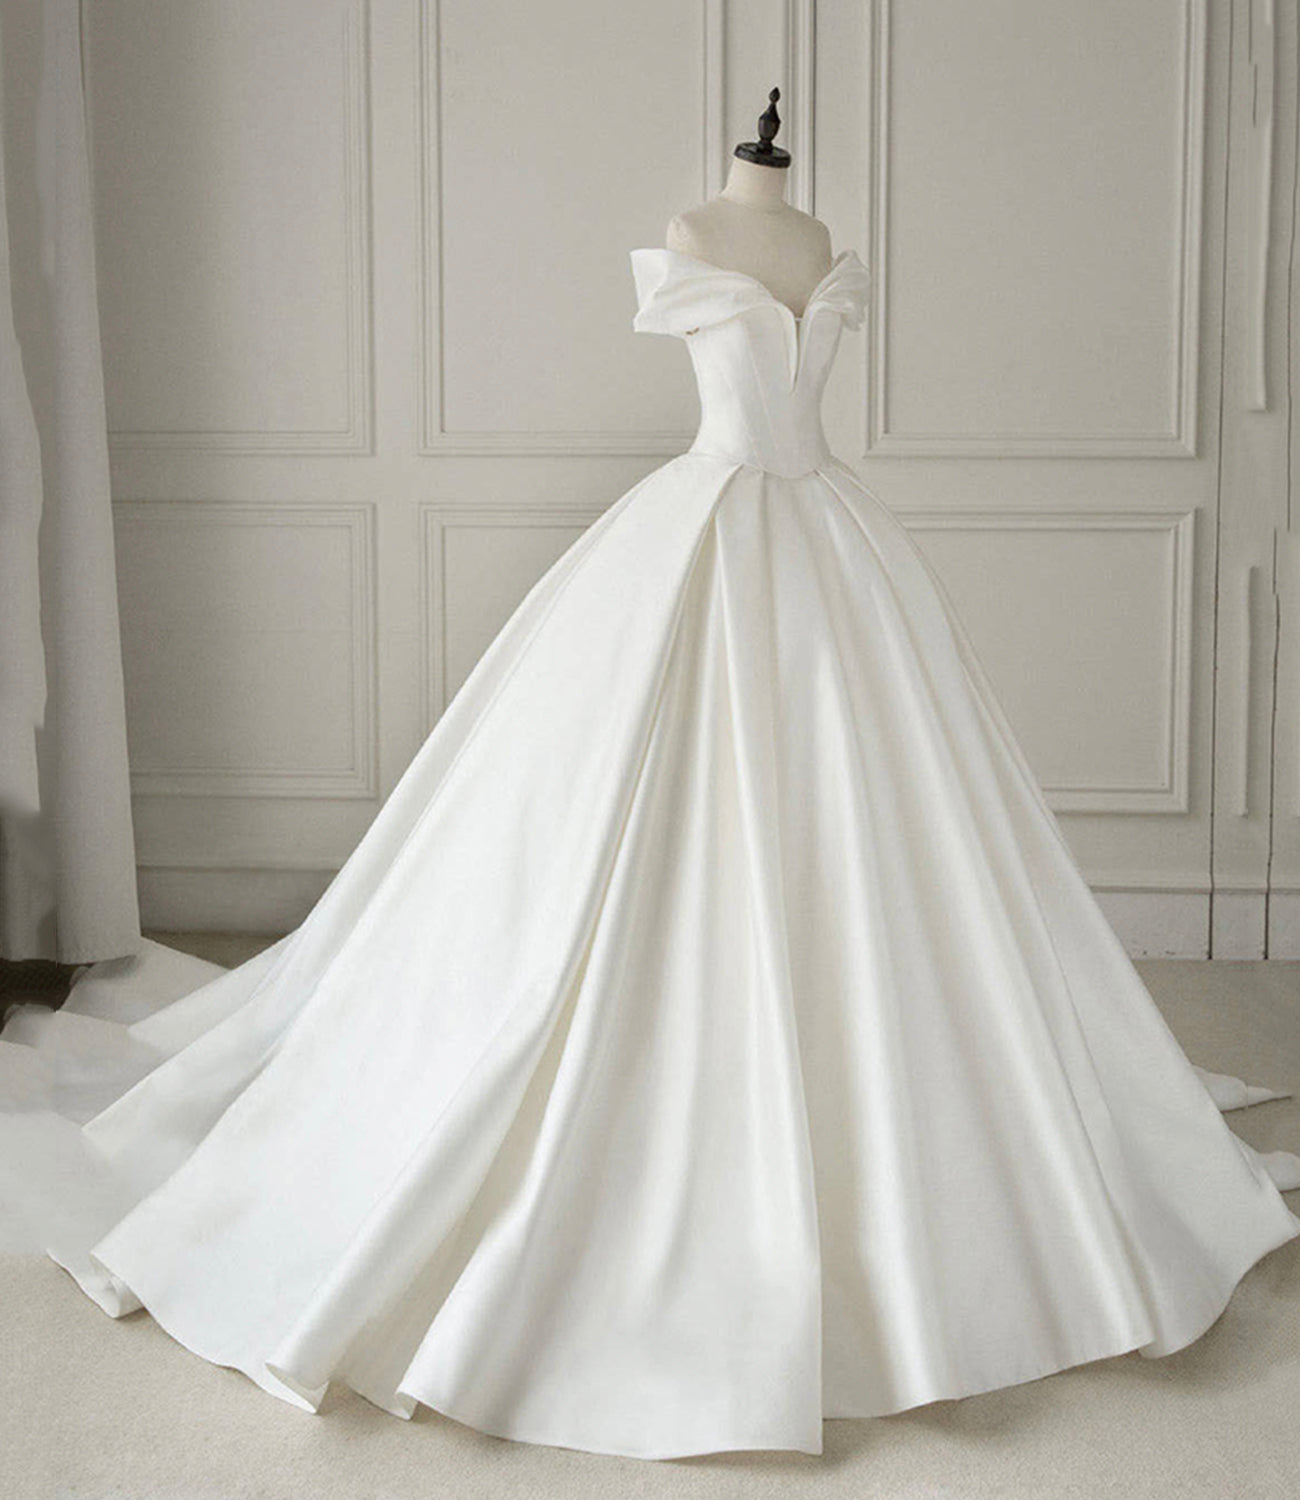 White satin long ball gown dress wedding dress  8805